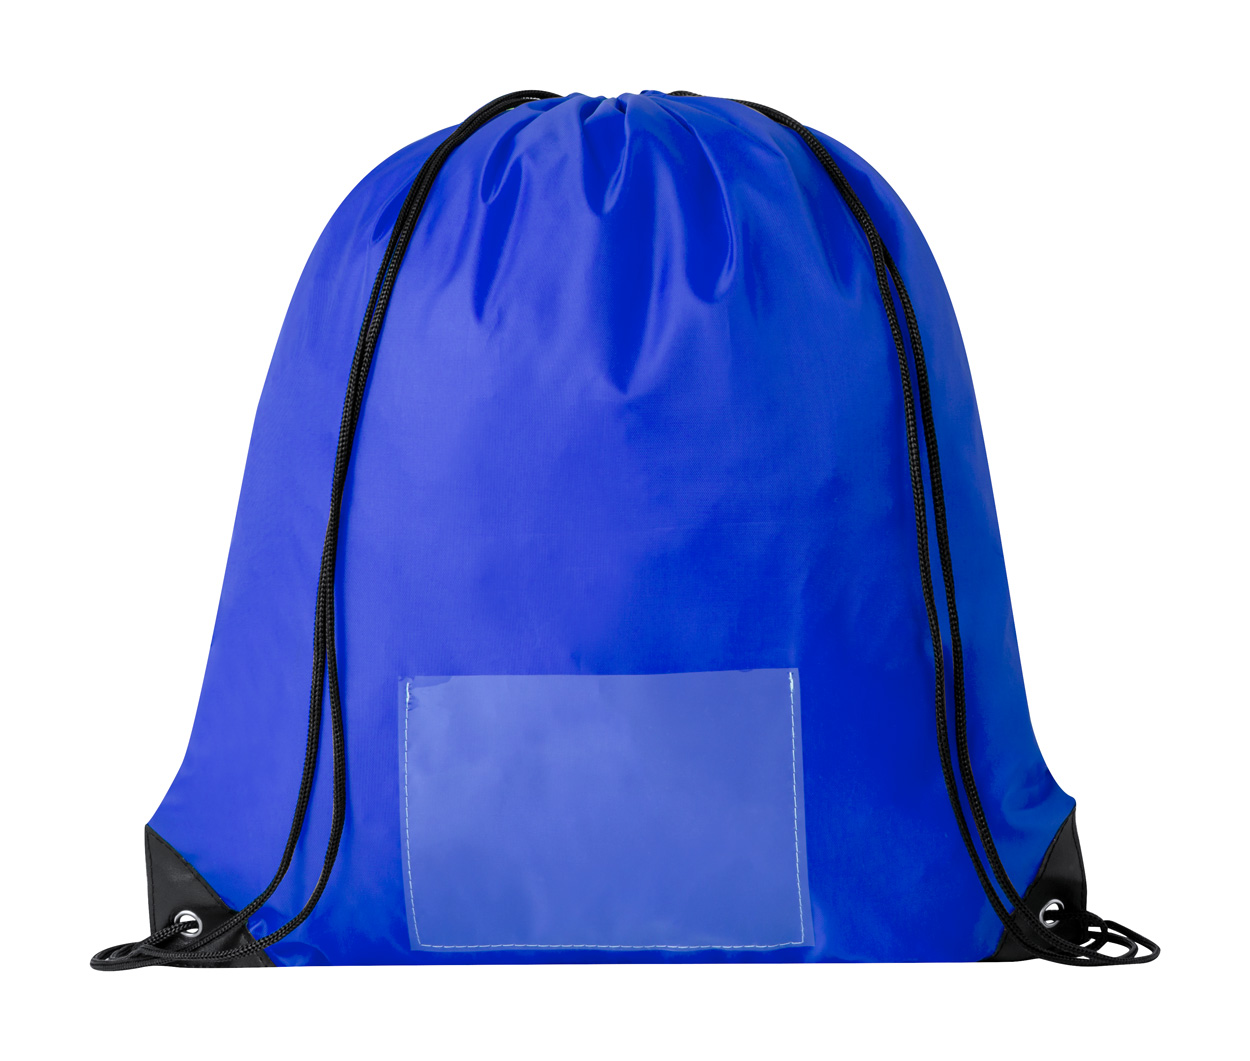 Selasi bag for download - blue